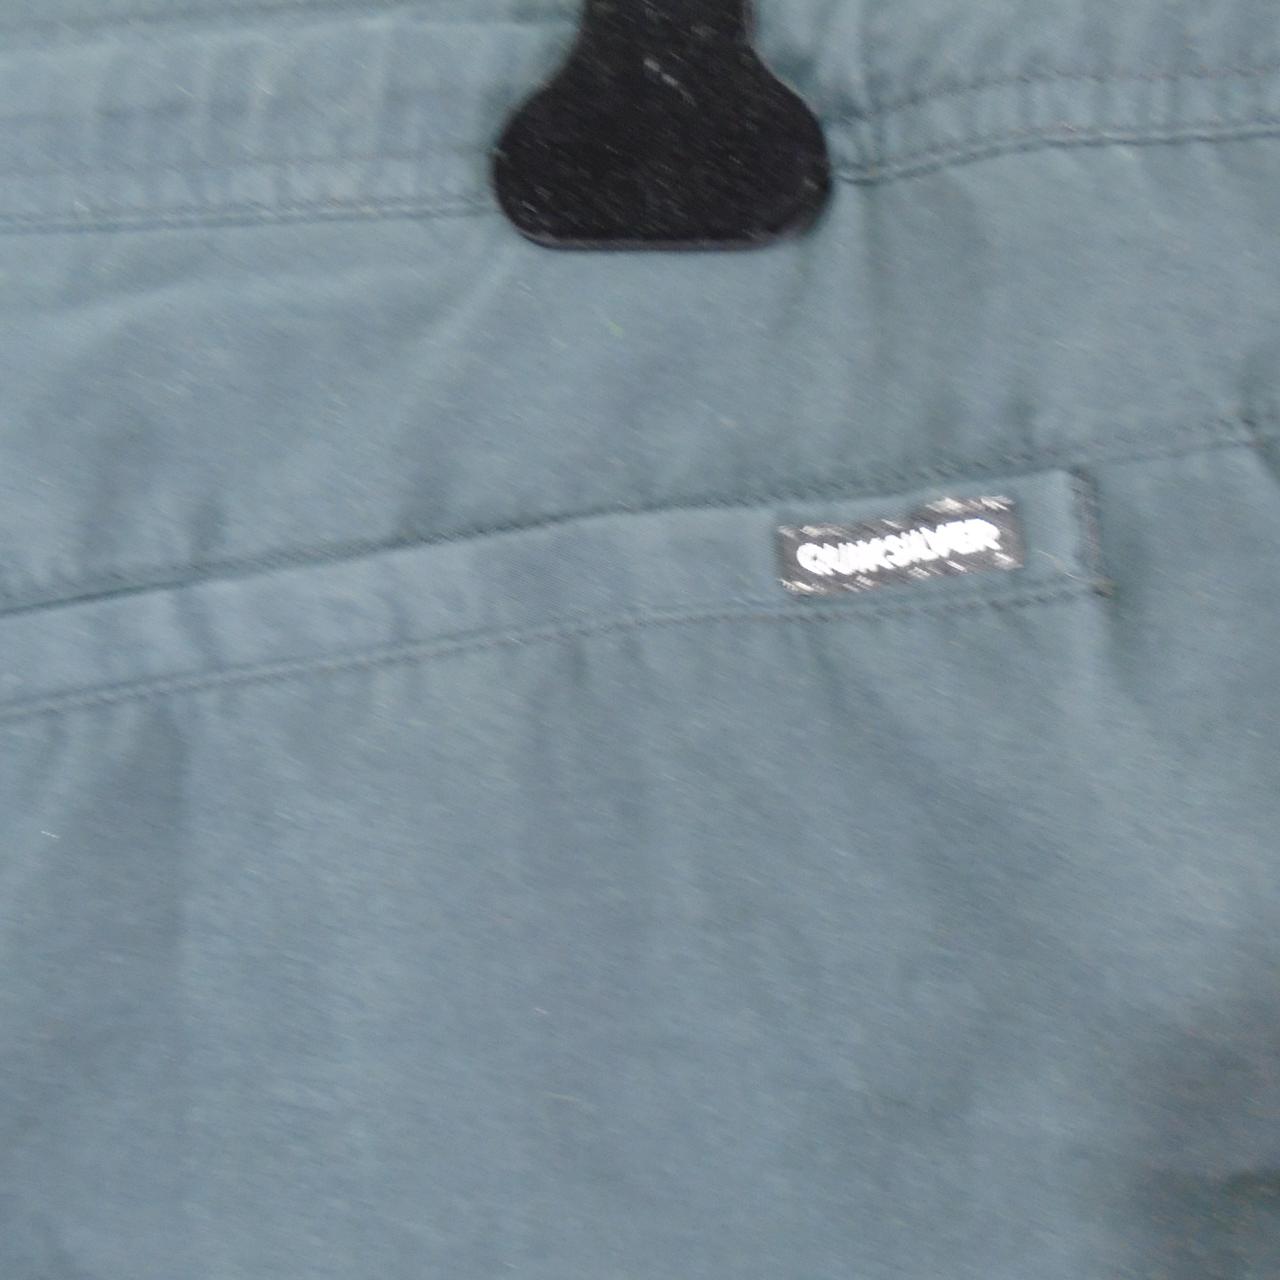 Men's Shorts Quiksilver. Black. L. Used. Good